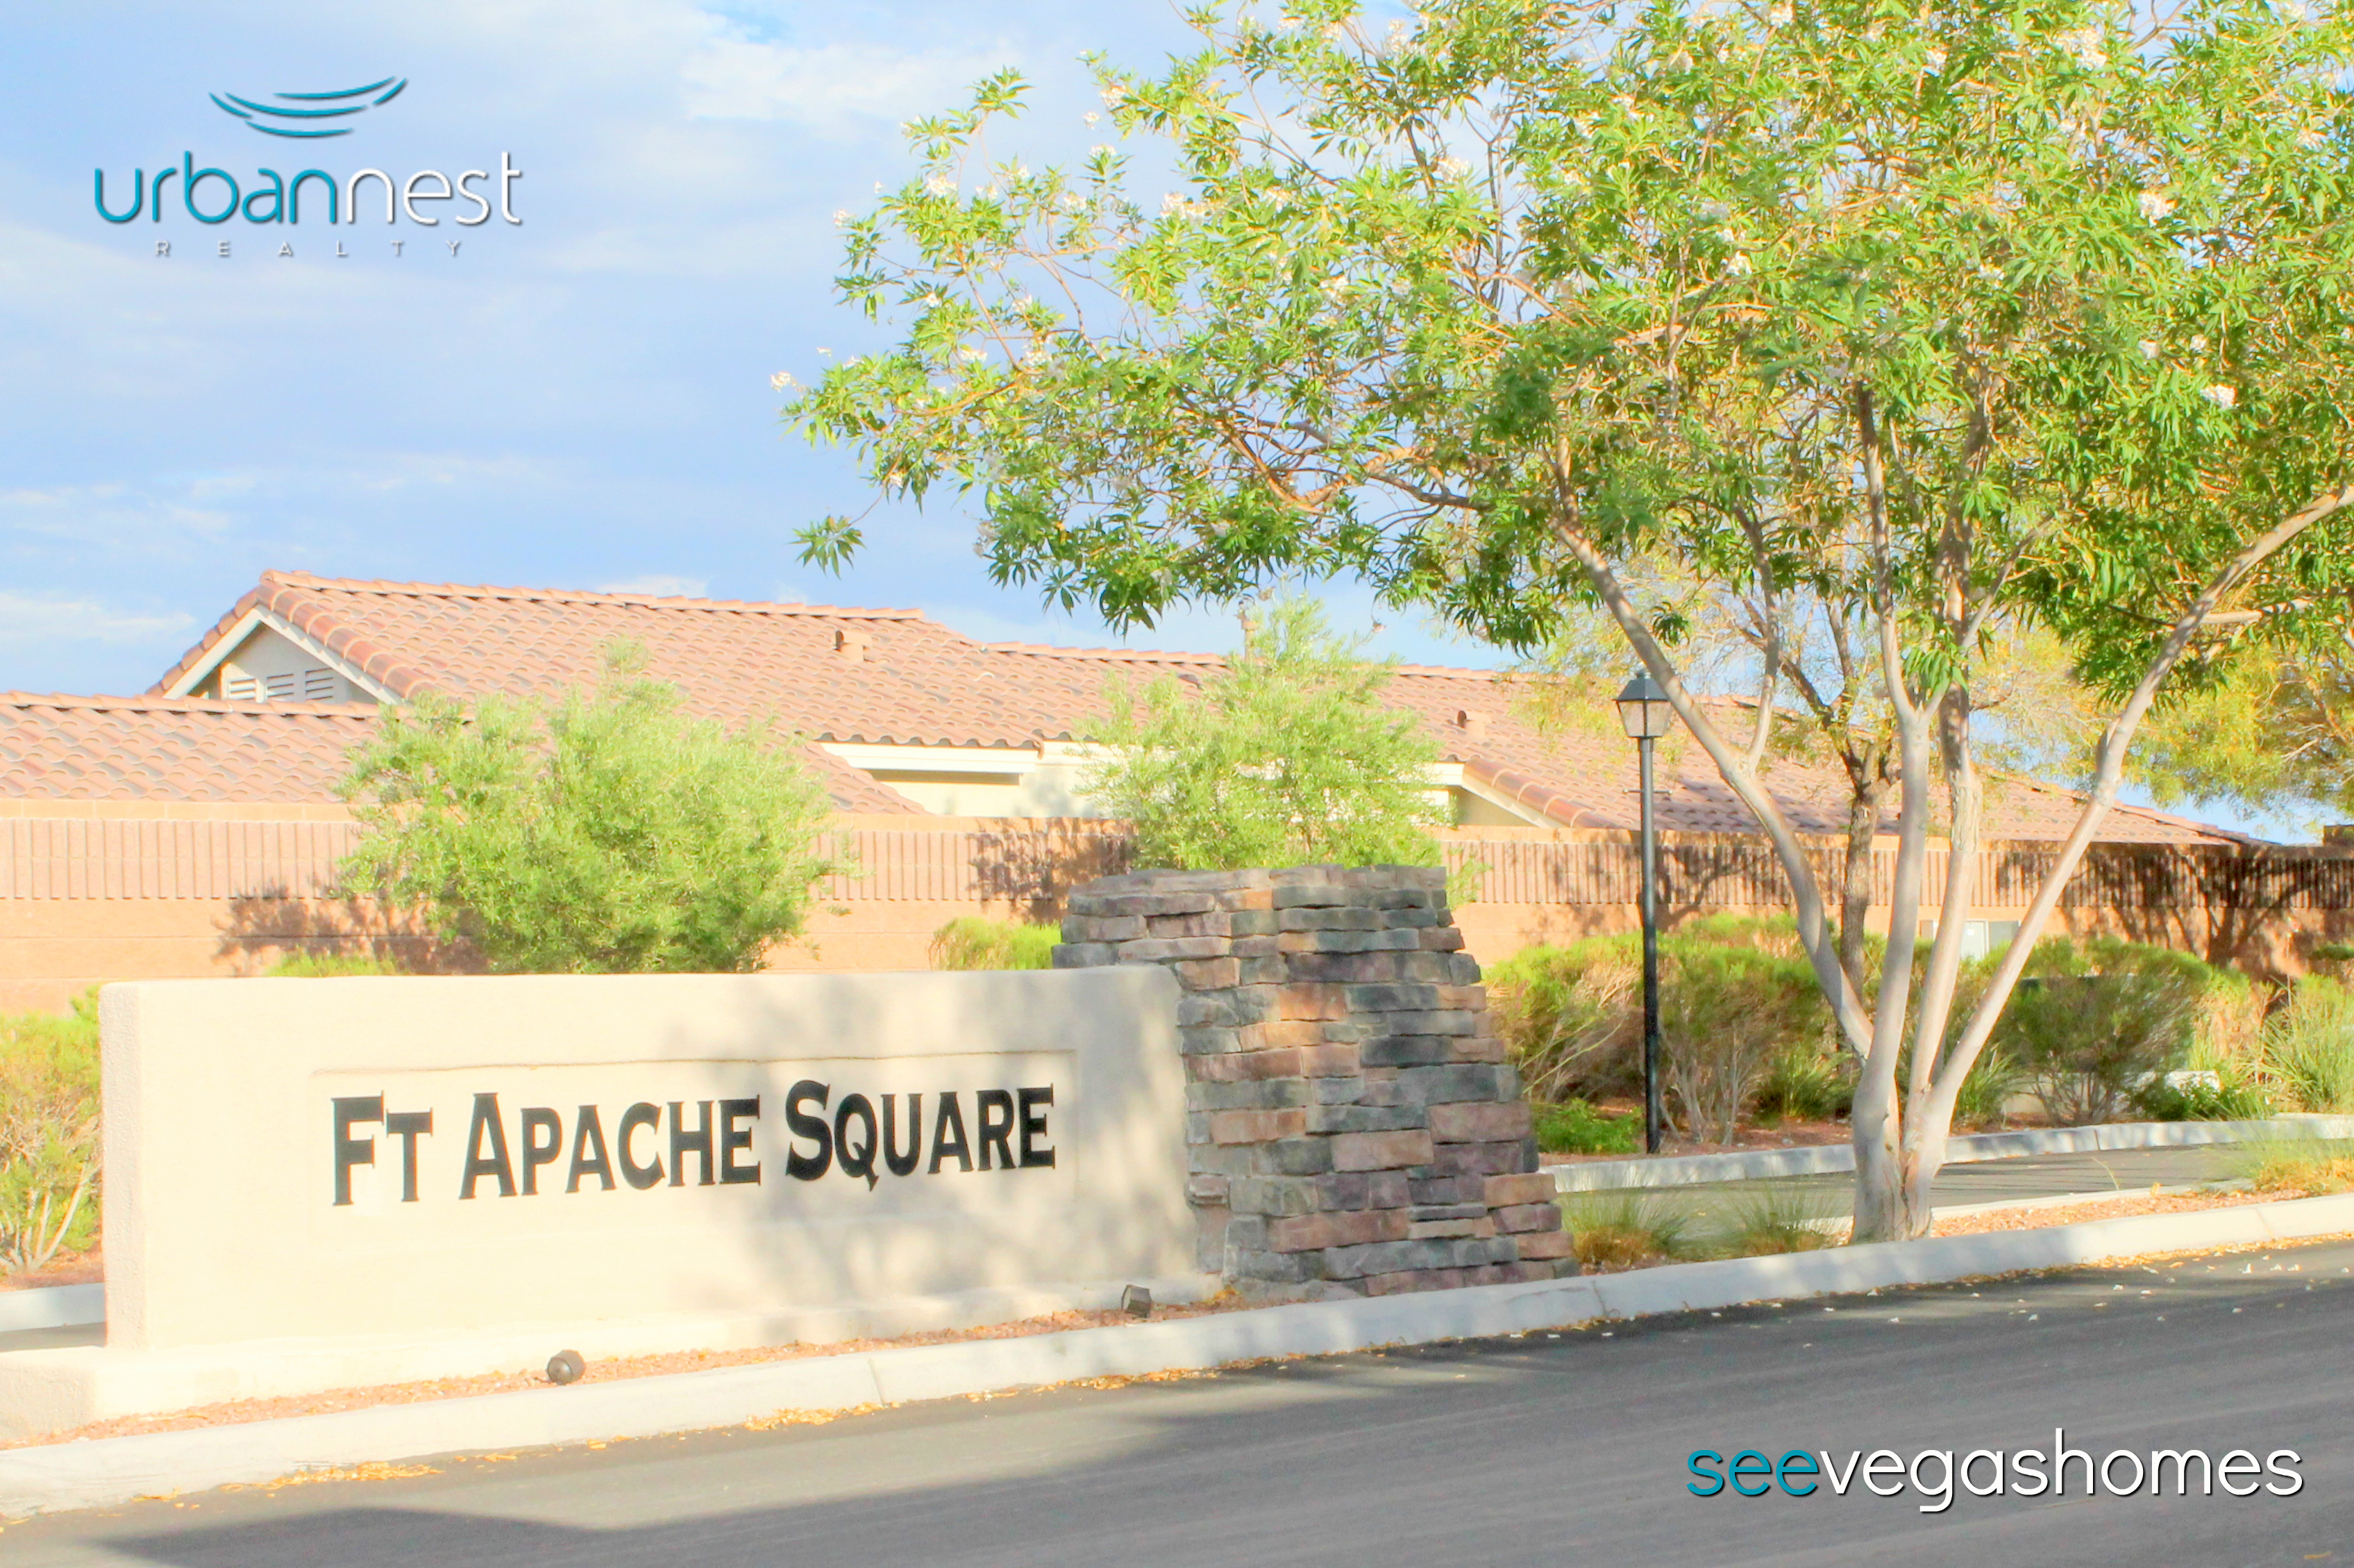 Ft Apache Square subdivision Fort Apache Ranch AMD Las Vegas NV 89149 SeeVegasHomes